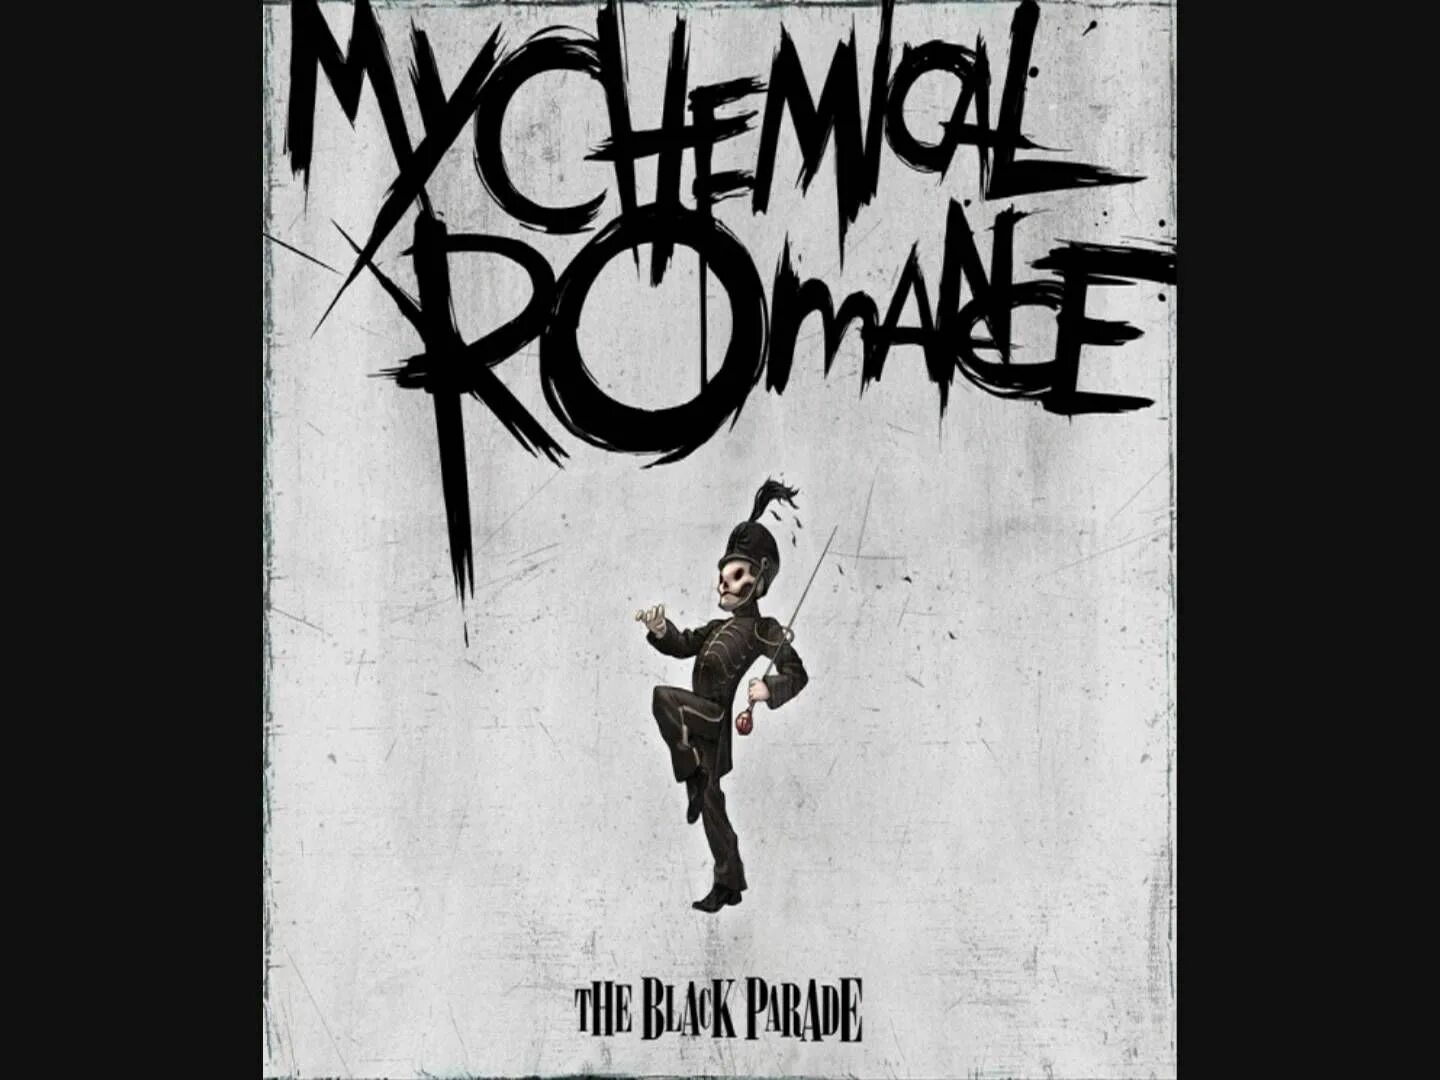 My Chemical Romance Black Parade альбом. My Chemical Romance обложка. My Chemical Romance альбомы. Май Кемикал романс обложка альбома. Welcome to the black parade my chemical